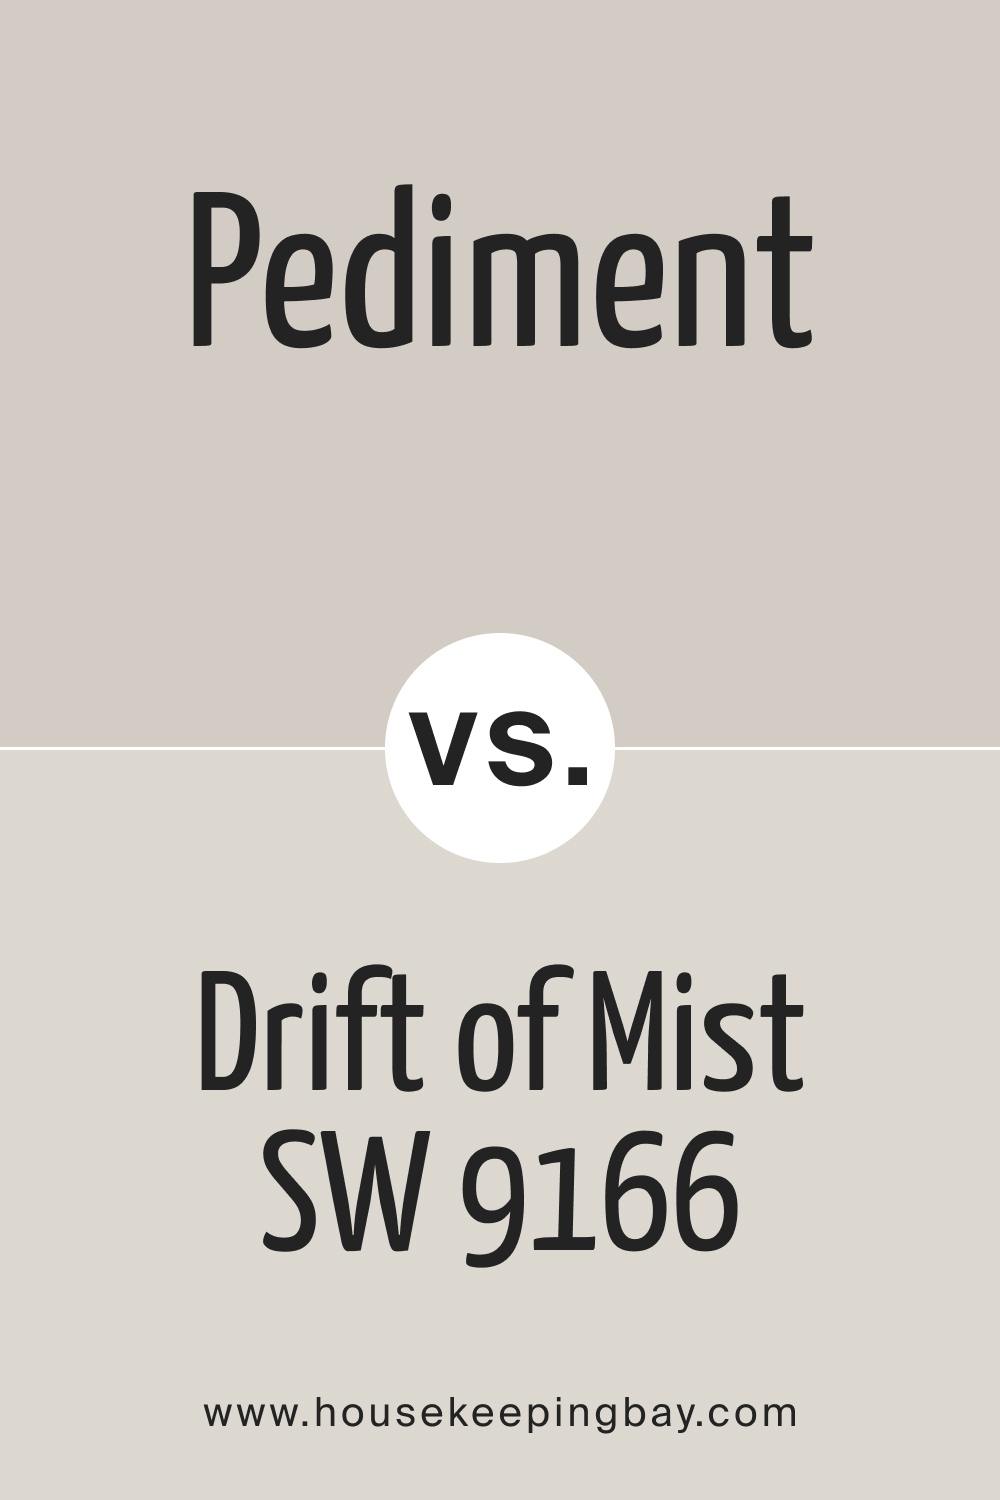 Pediment SW 7634 vs Drift of Mist SW 9166